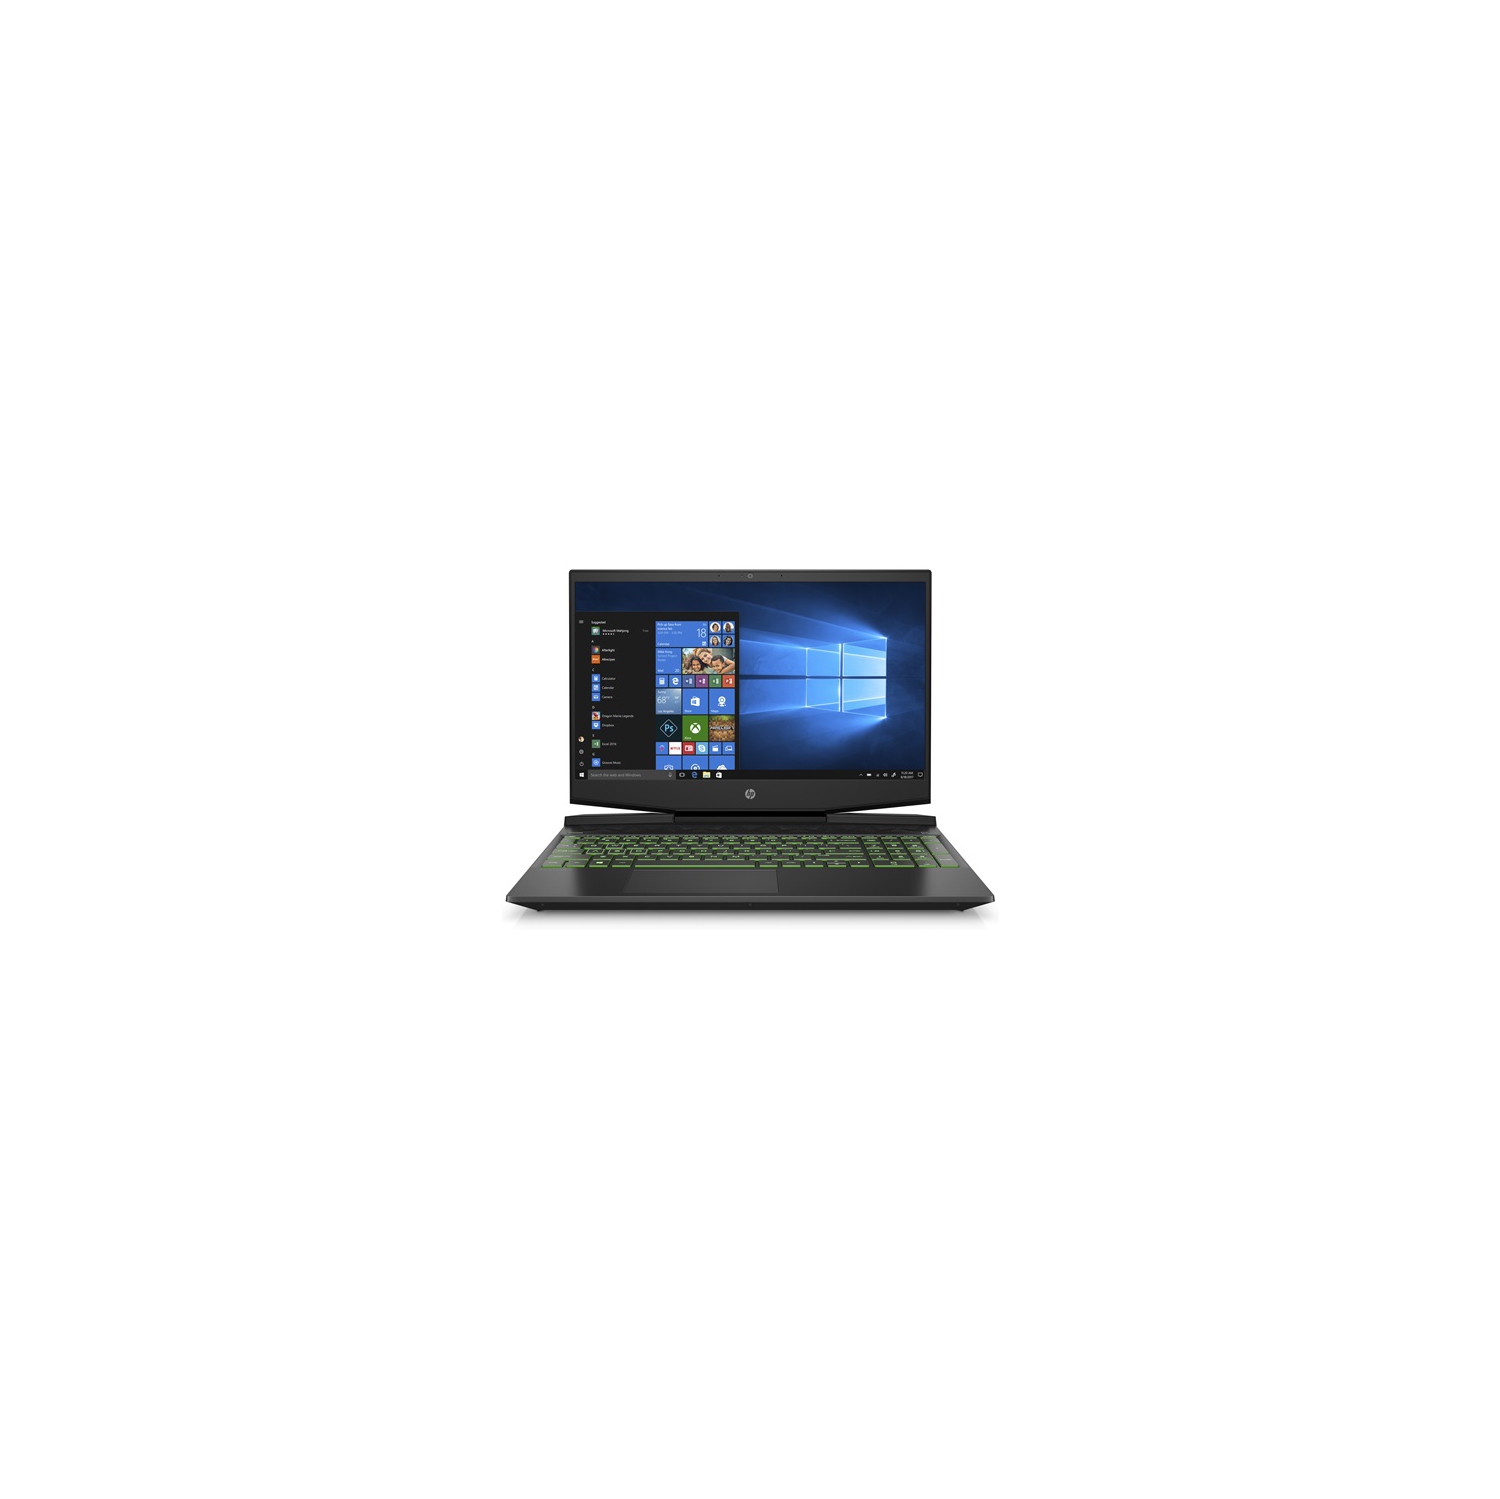 HP Pavilion Gaming 15.6" Laptop 15-dk0030nr (Intel Core i7-9750H / 256GB SSD / 8GB RAM / NVIDIA GeForce GTX 1660 Ti) - 6QX96UA#ABA - Shadow Black